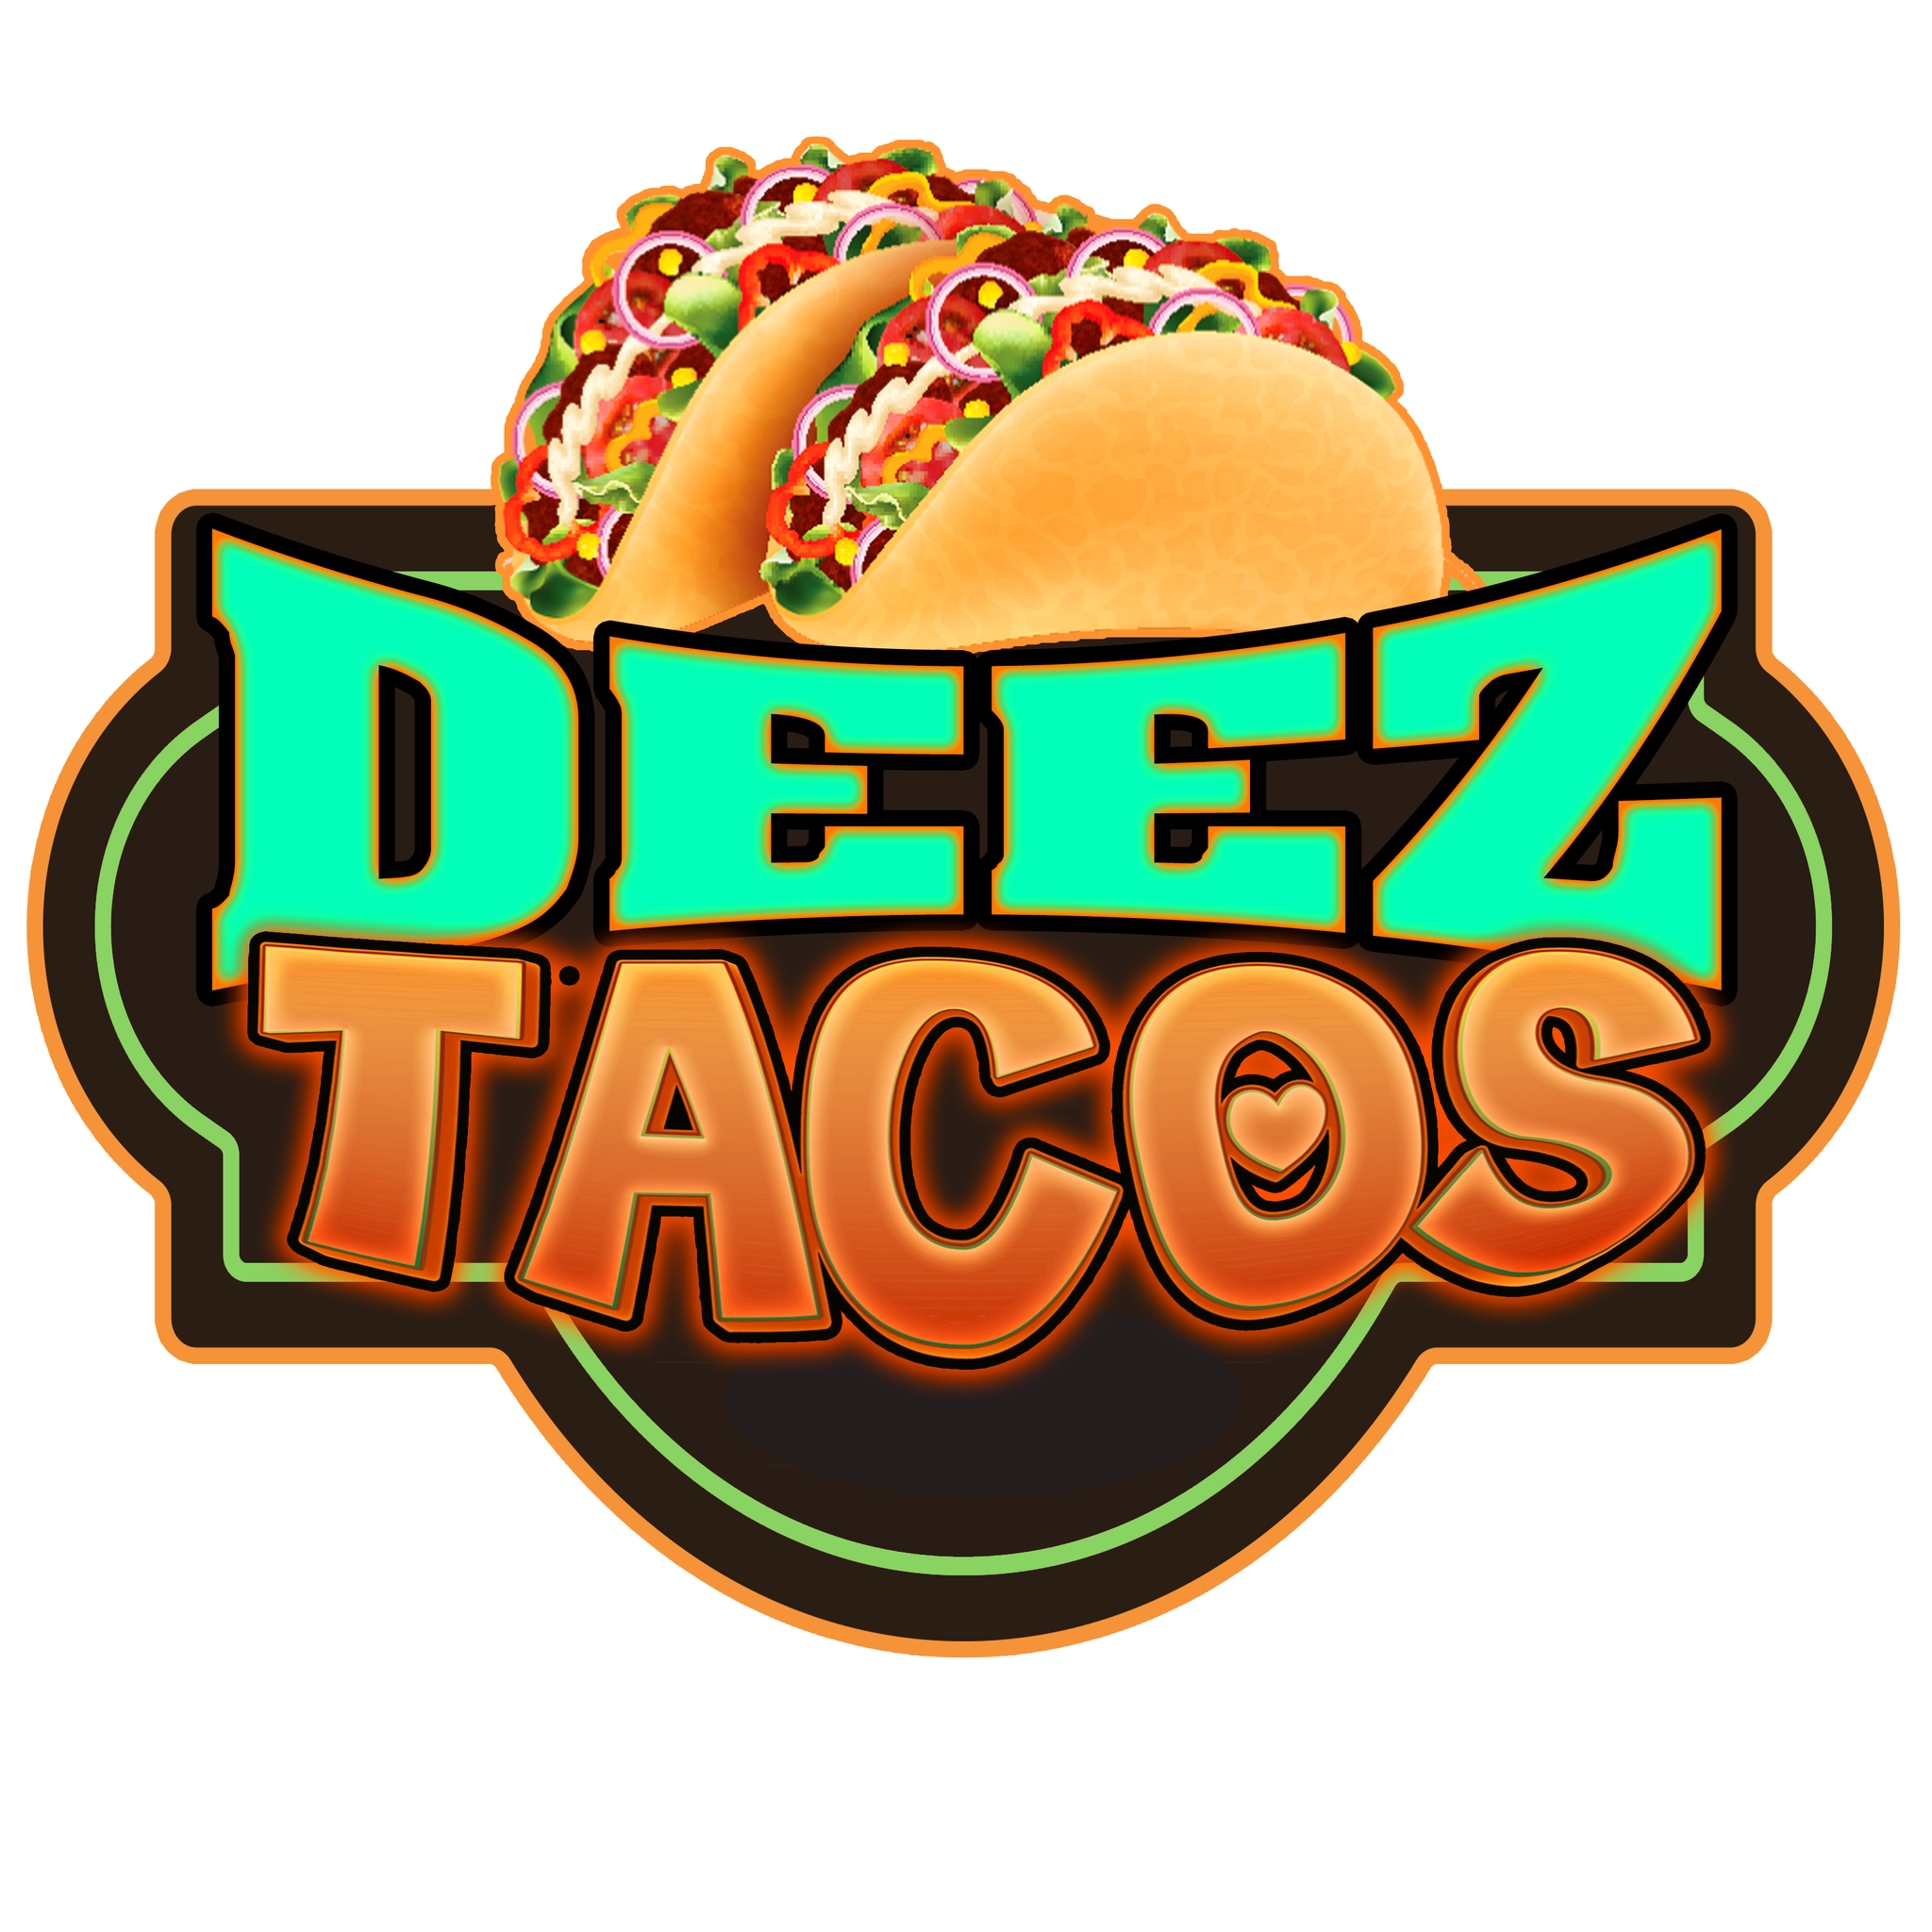 Eat Deez Tacos